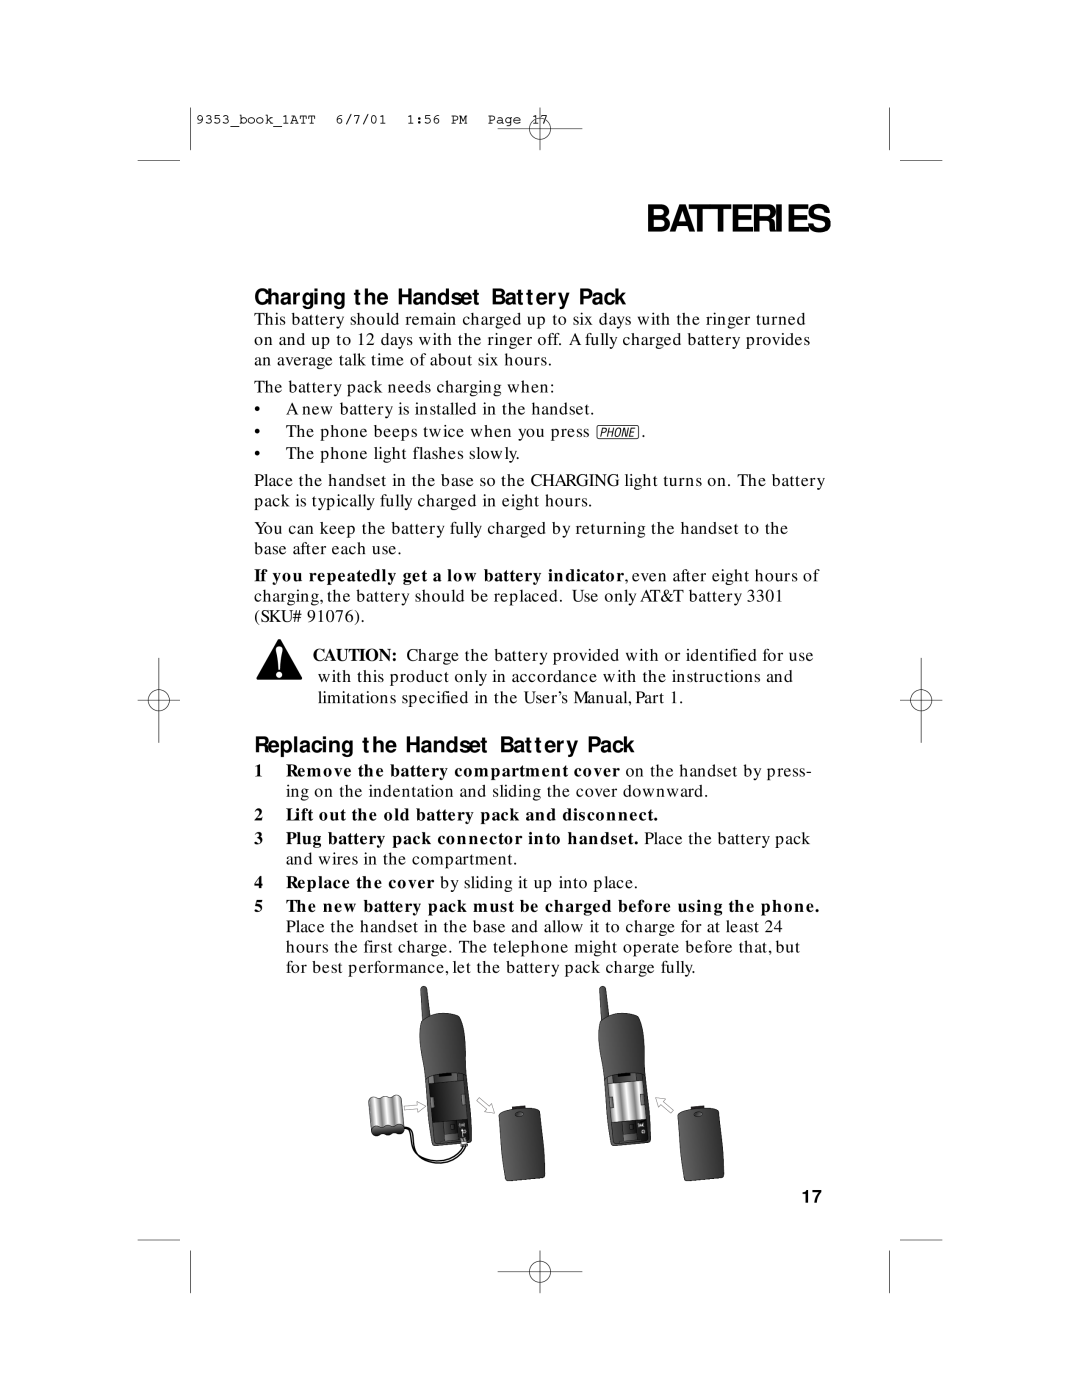 AT&T 9353 user manual Batteries, Charging the Handset Battery Pack, Replacing the Handset Battery Pack 